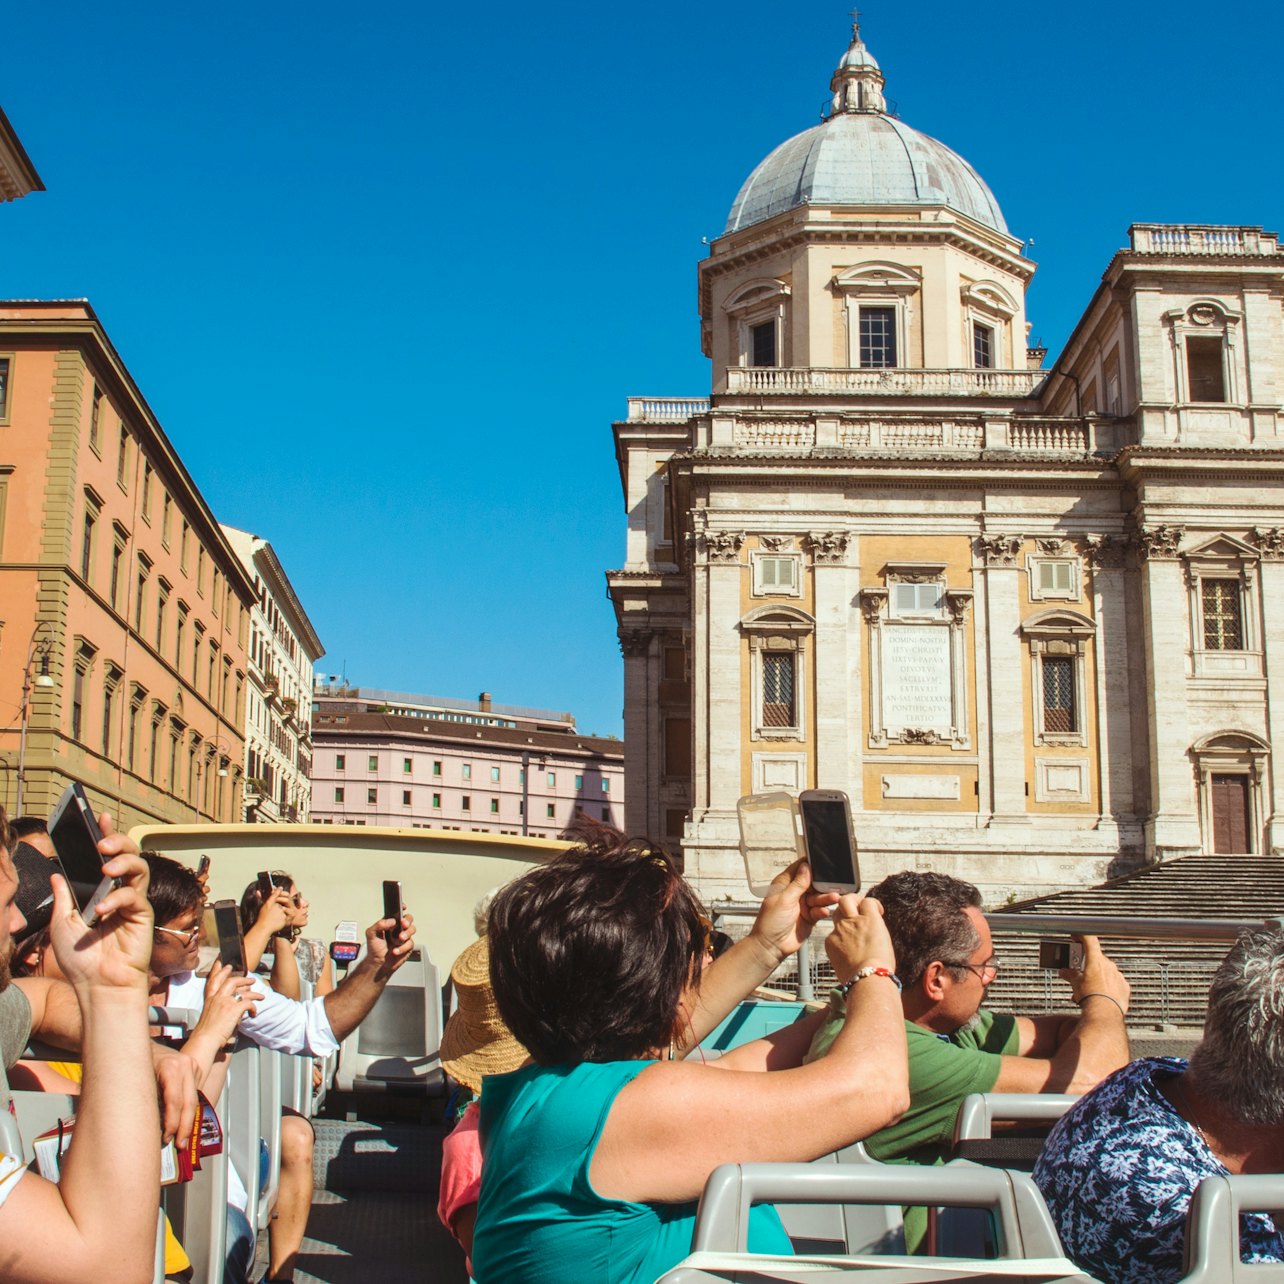 Big Bus Roma: Tour en bus turístico - Alojamientos en Roma